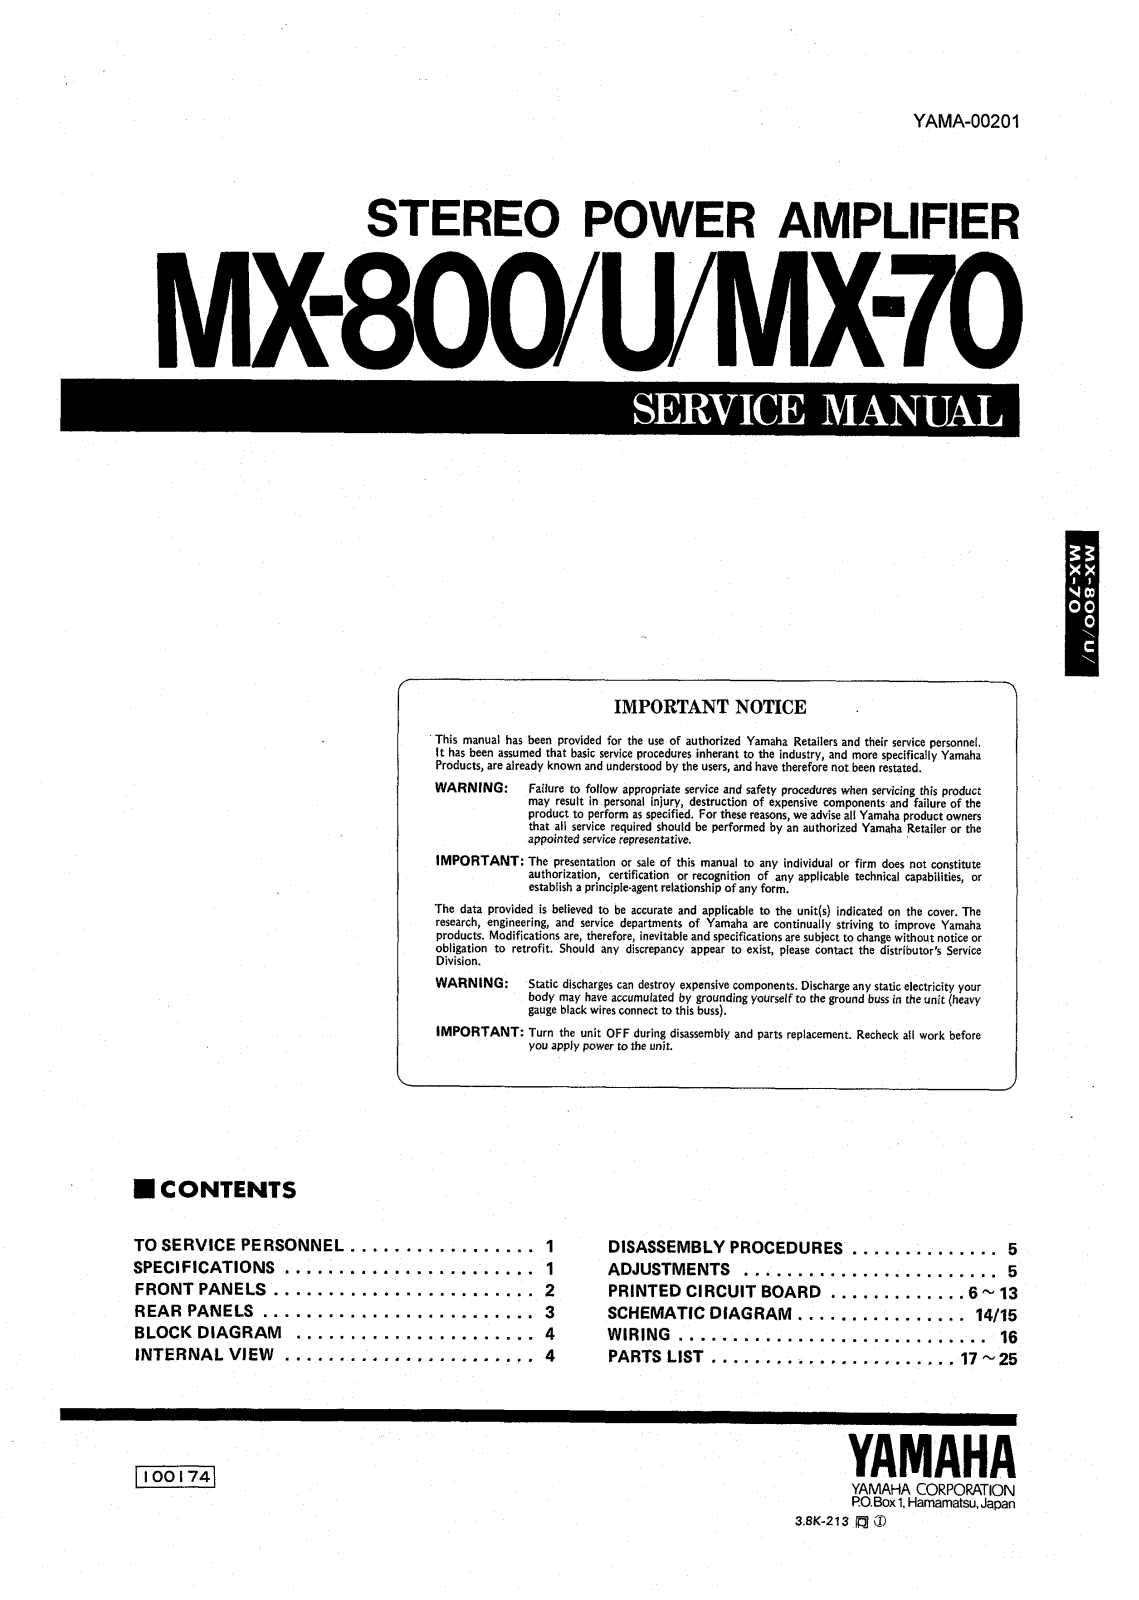 Yamaha MXU, MX-800, MX-70 Service Manual